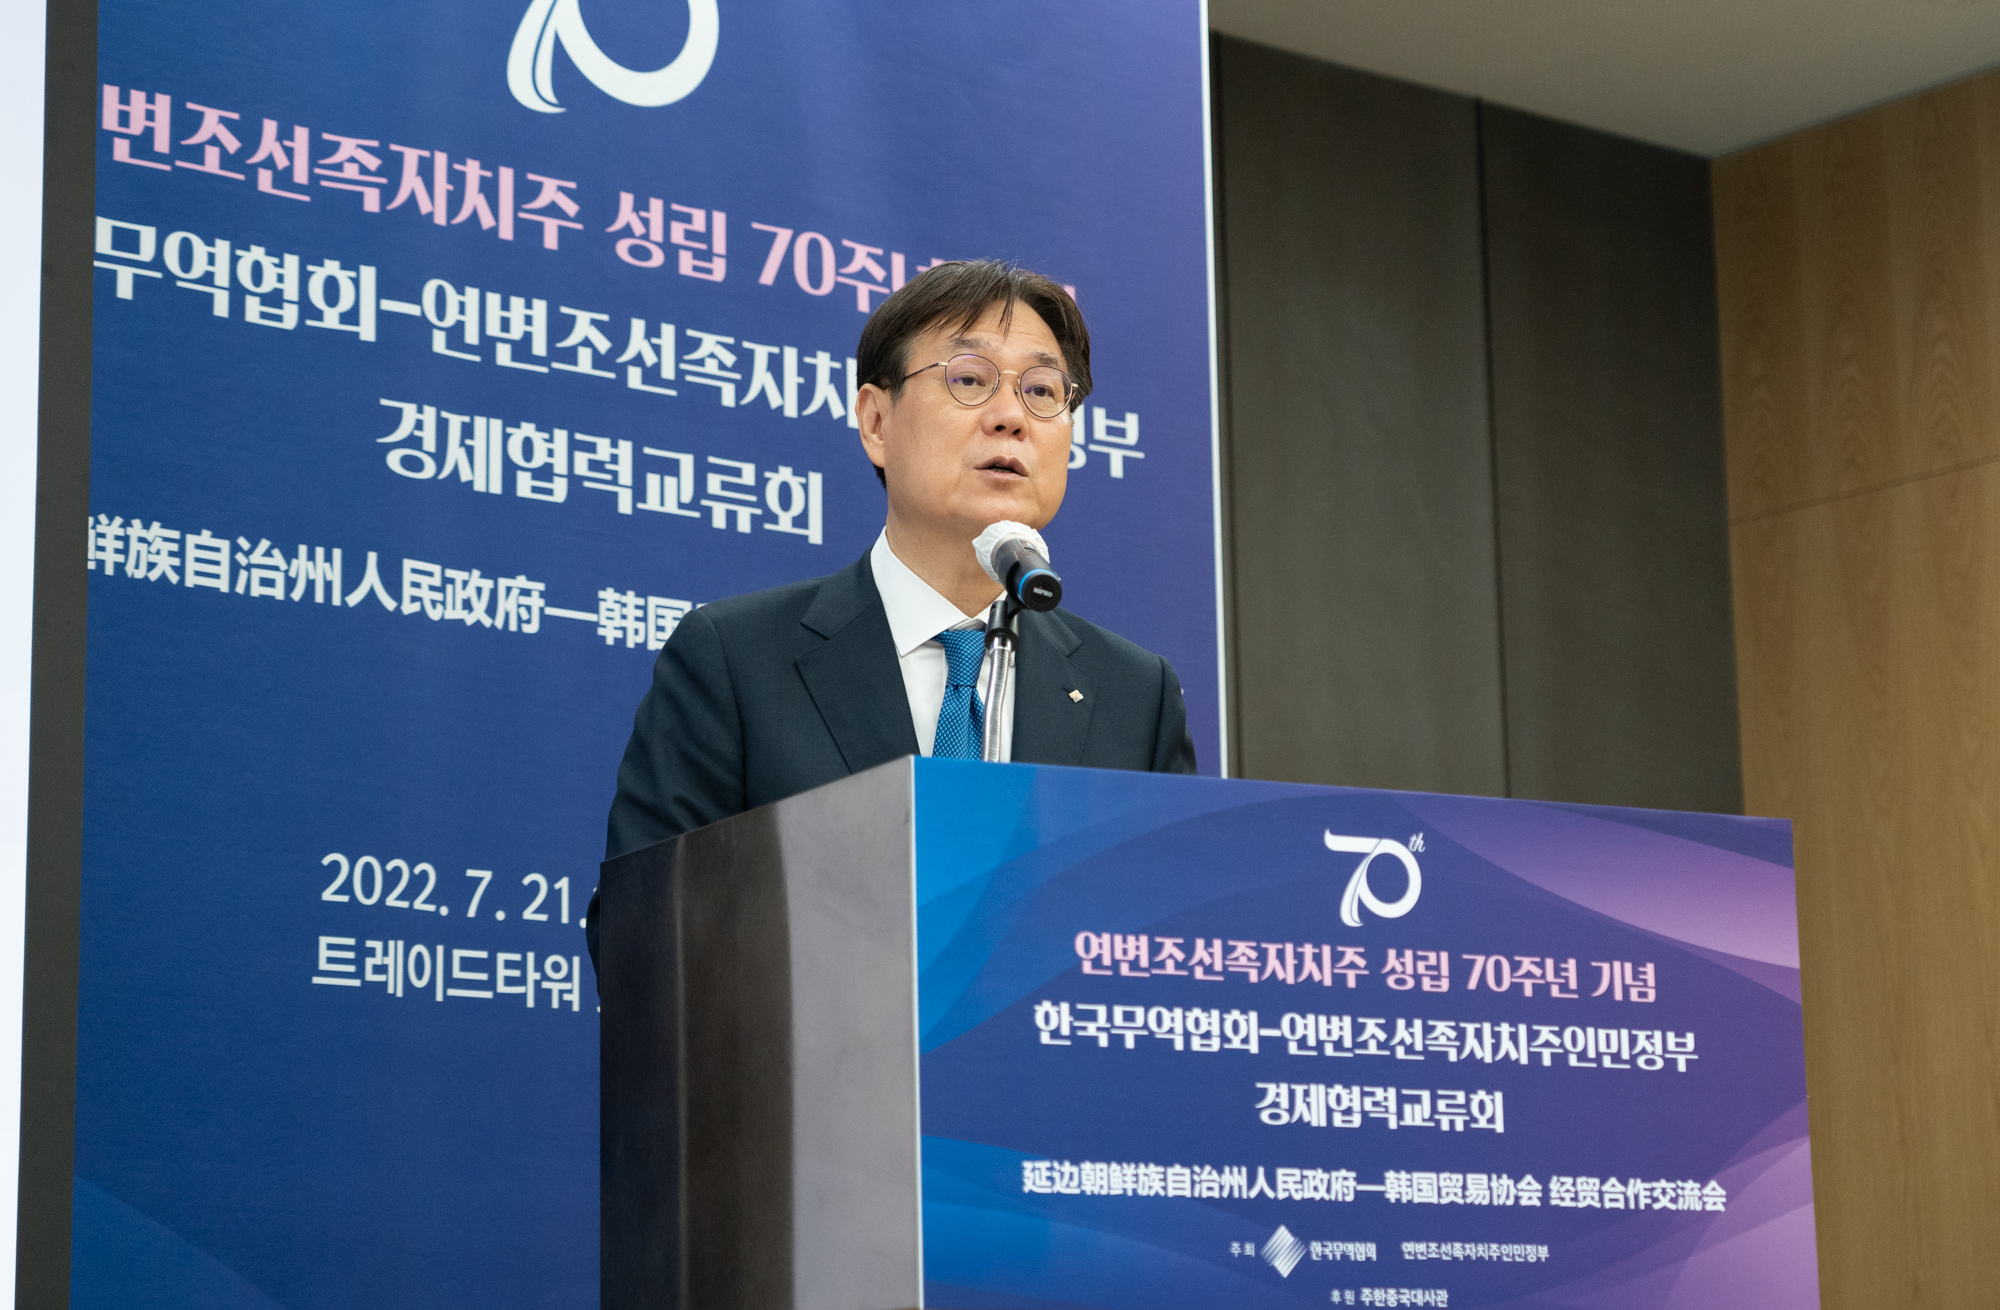  Business networking to commemorate 70th anniversary of the Yanbian Korean Autonomous Prefecture